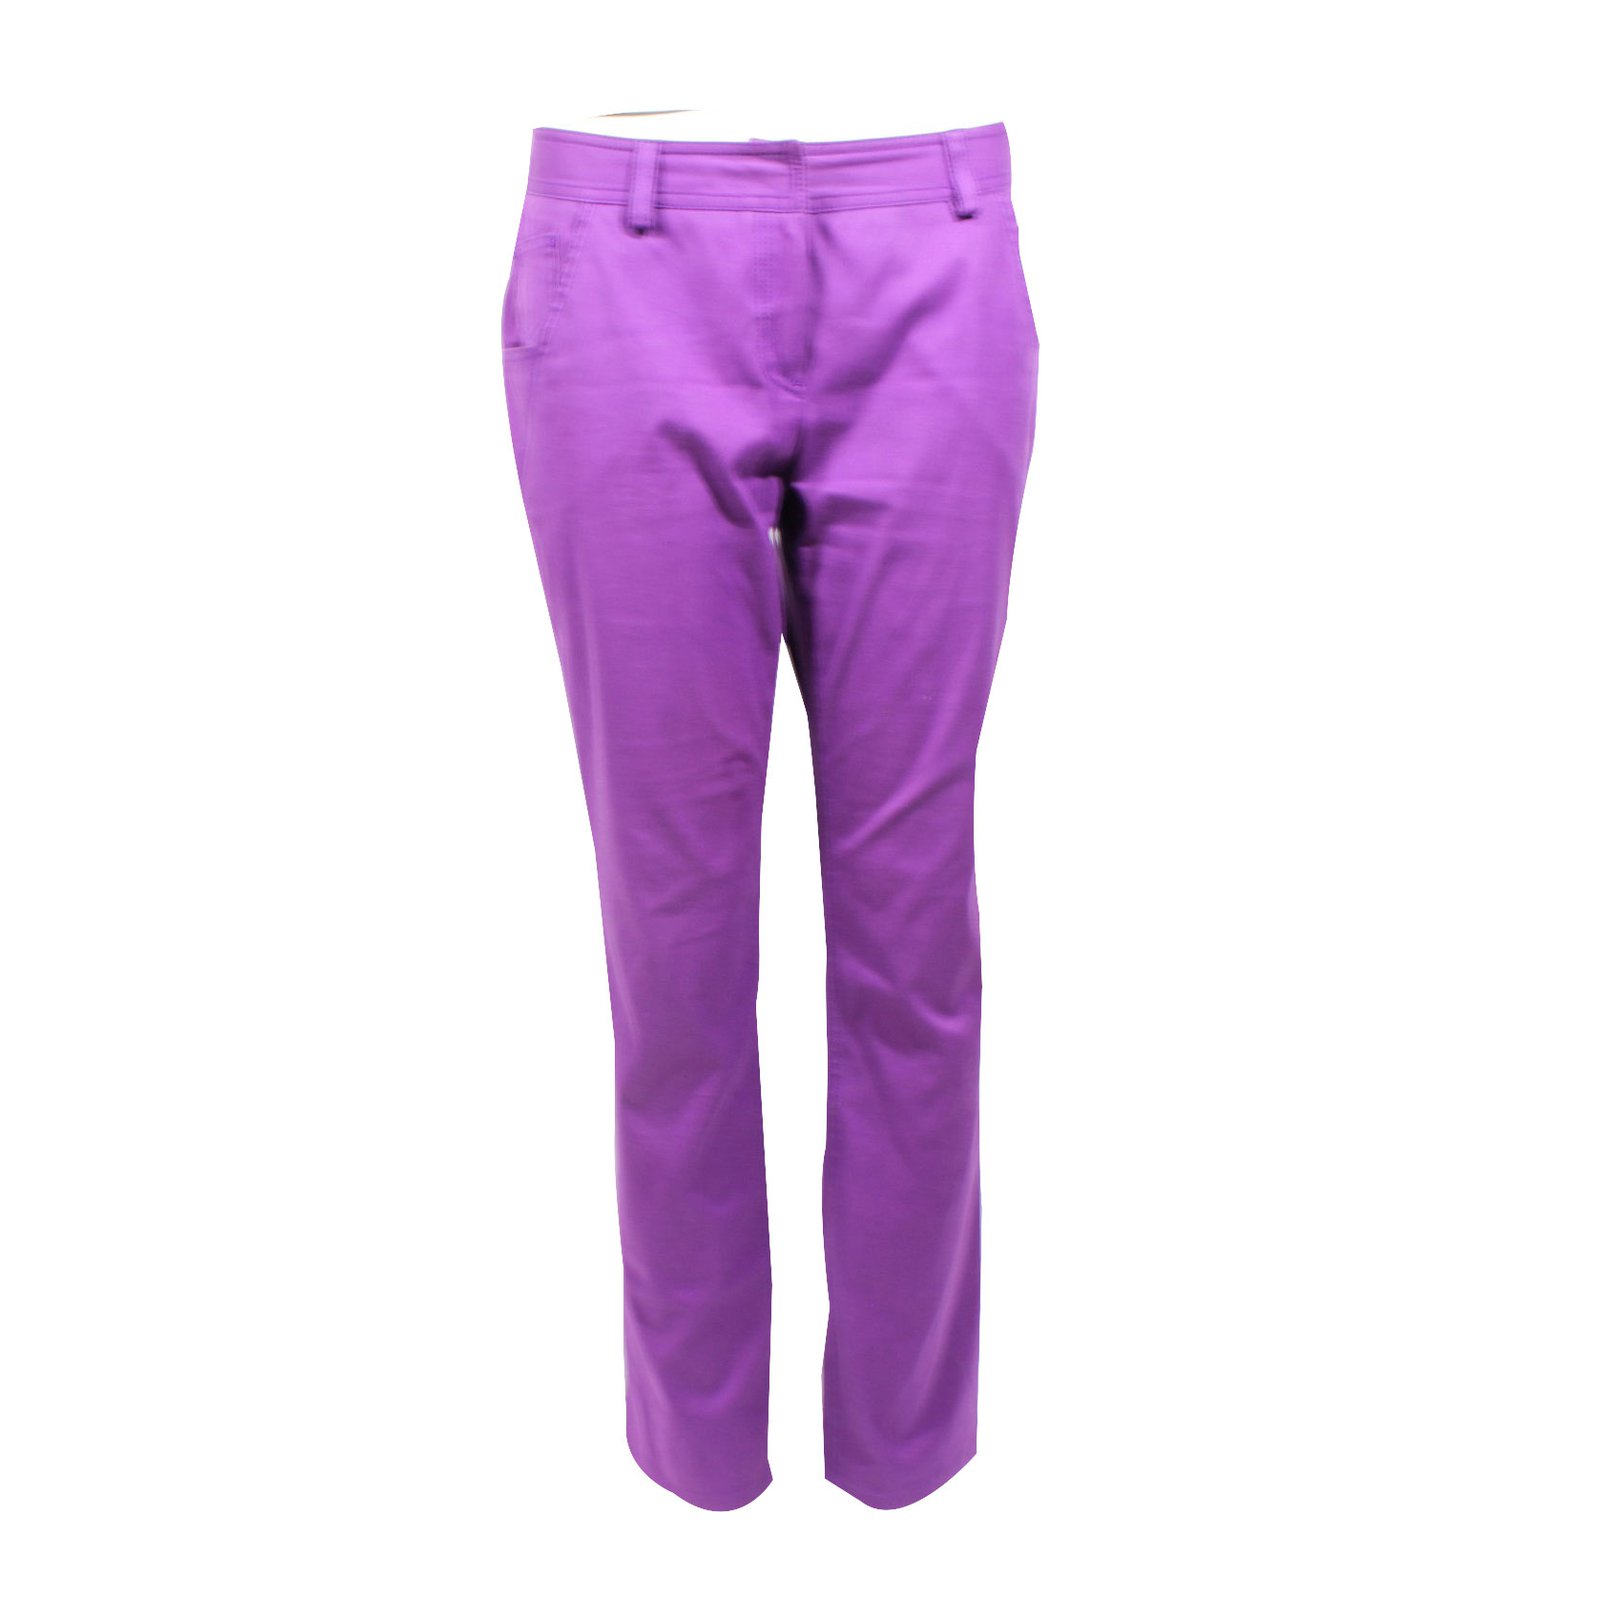 https://cdn1.jolicloset.com/imgr/full/2016/08/22517-1/christian-dior-purple-cotton-trousers-pants-leggings.jpg